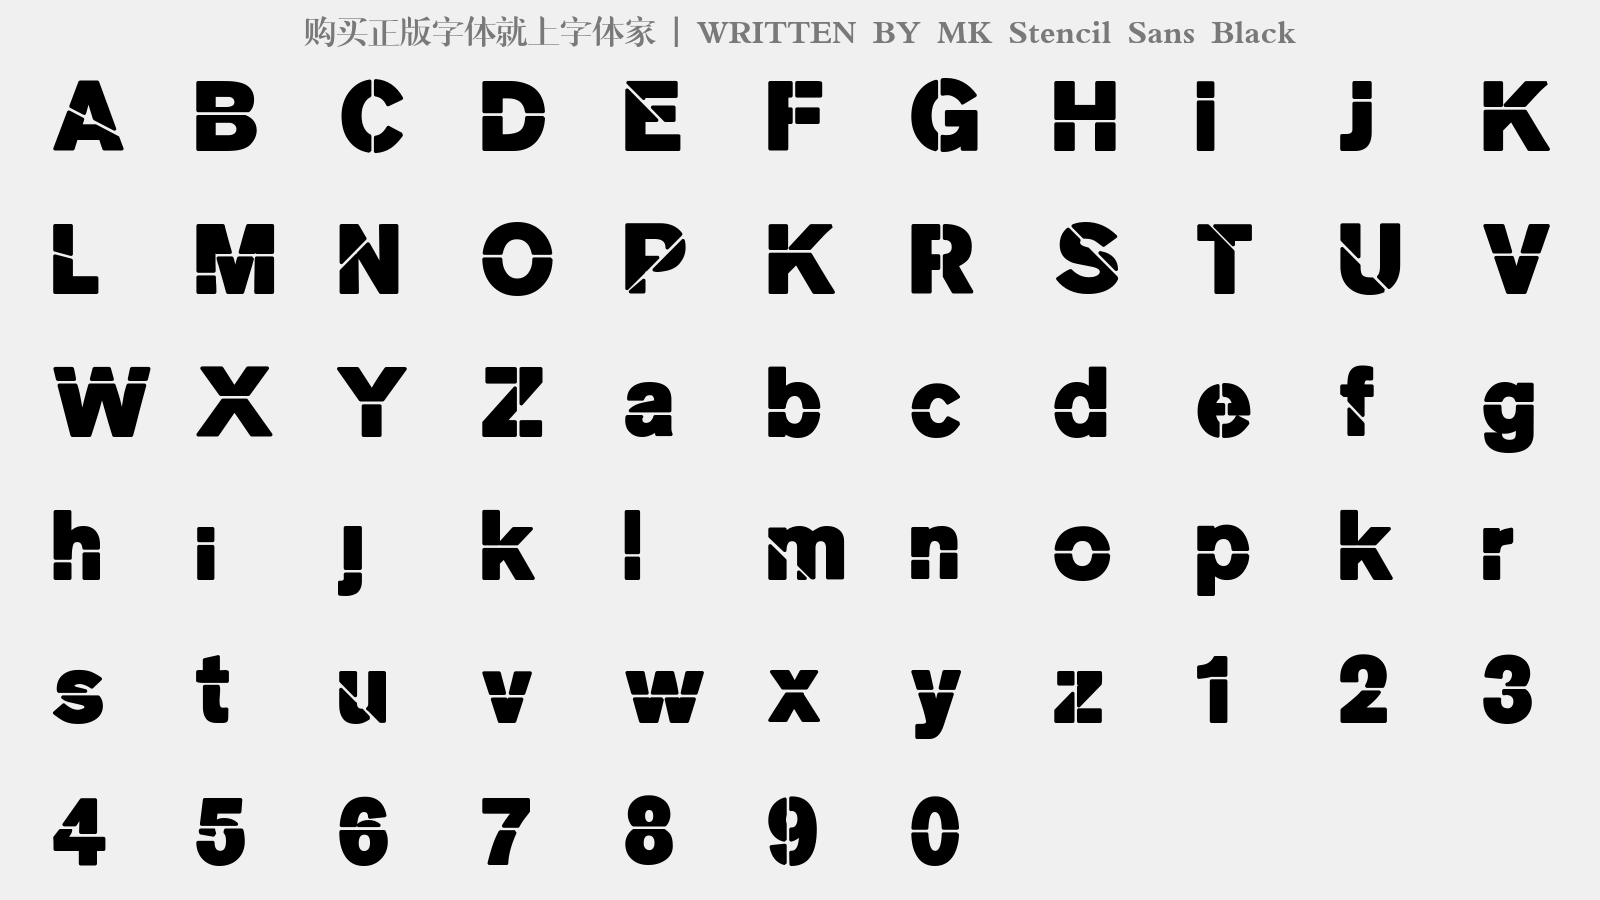 MK Stencil Sans Black - 大写字母/小写字母/数字